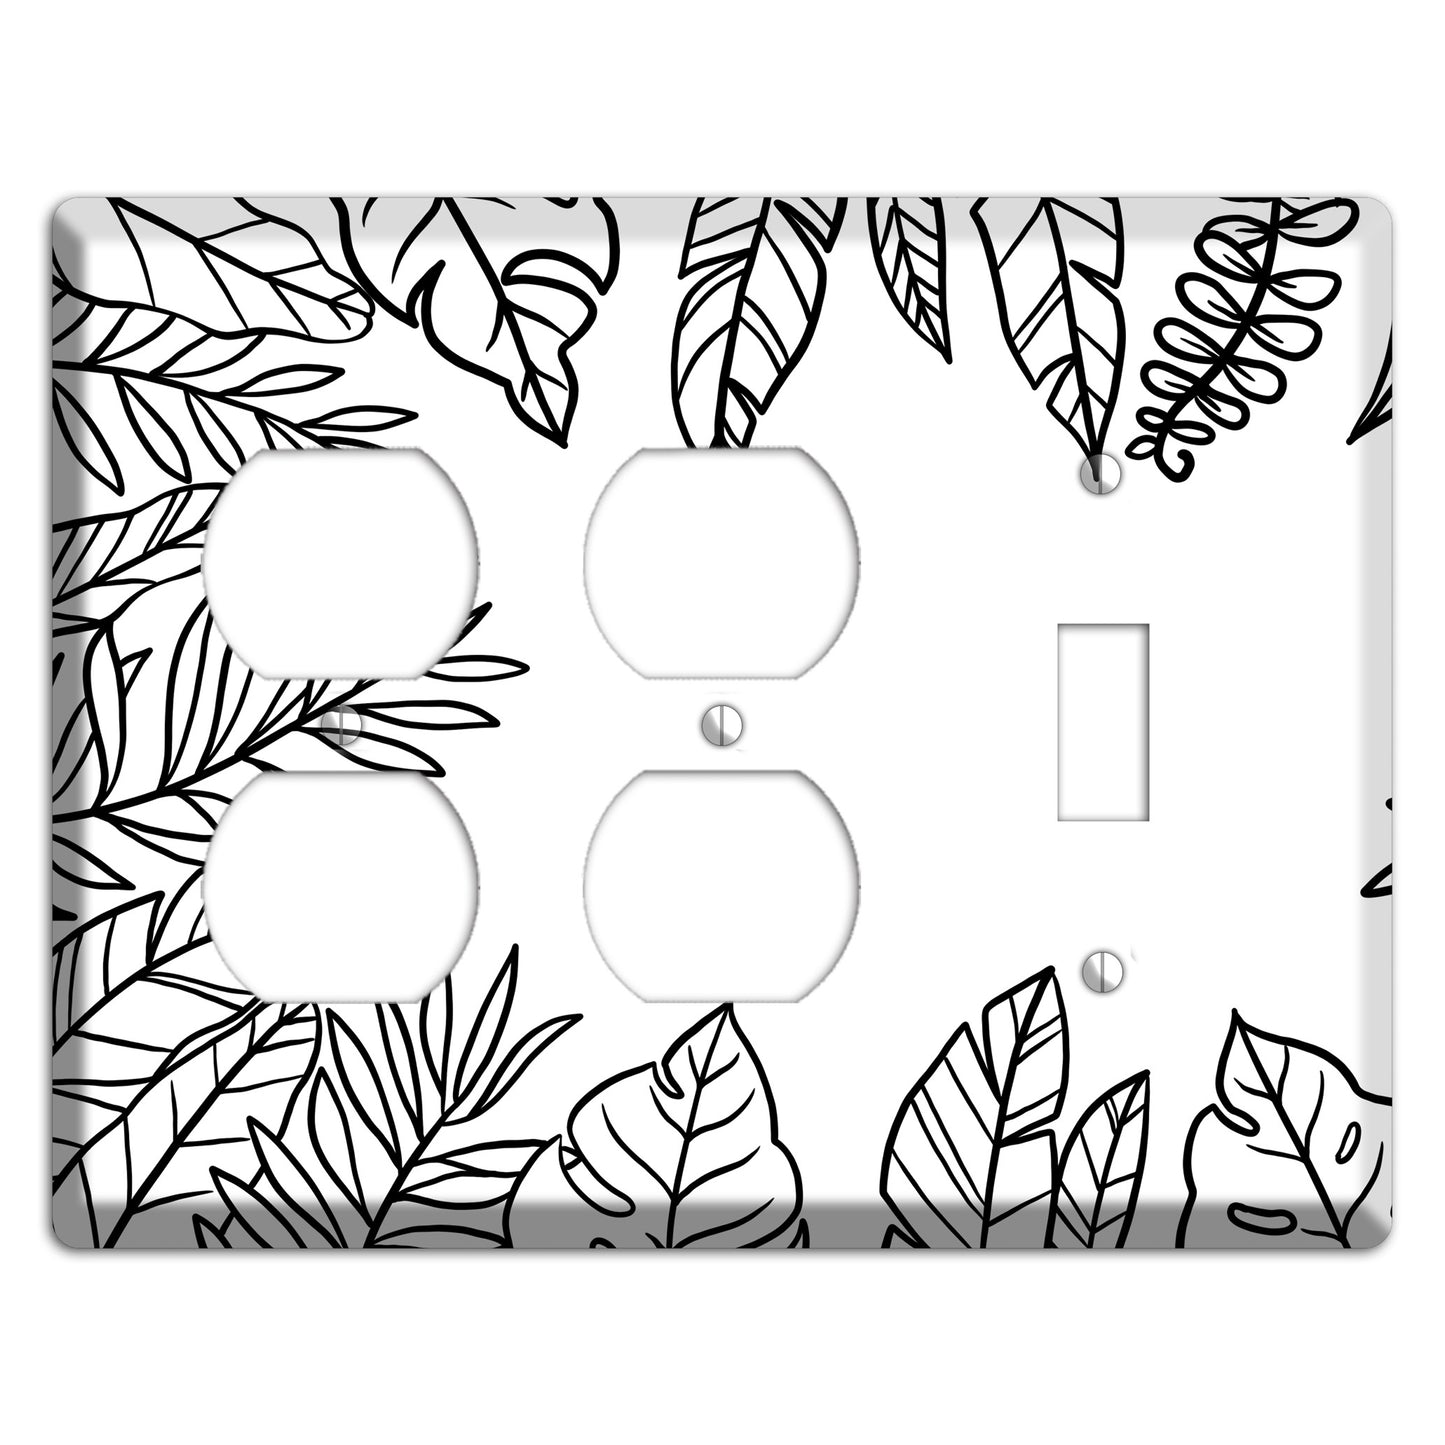 Hand-Drawn Leaves 5 2 Duplex / Toggle Wallplate